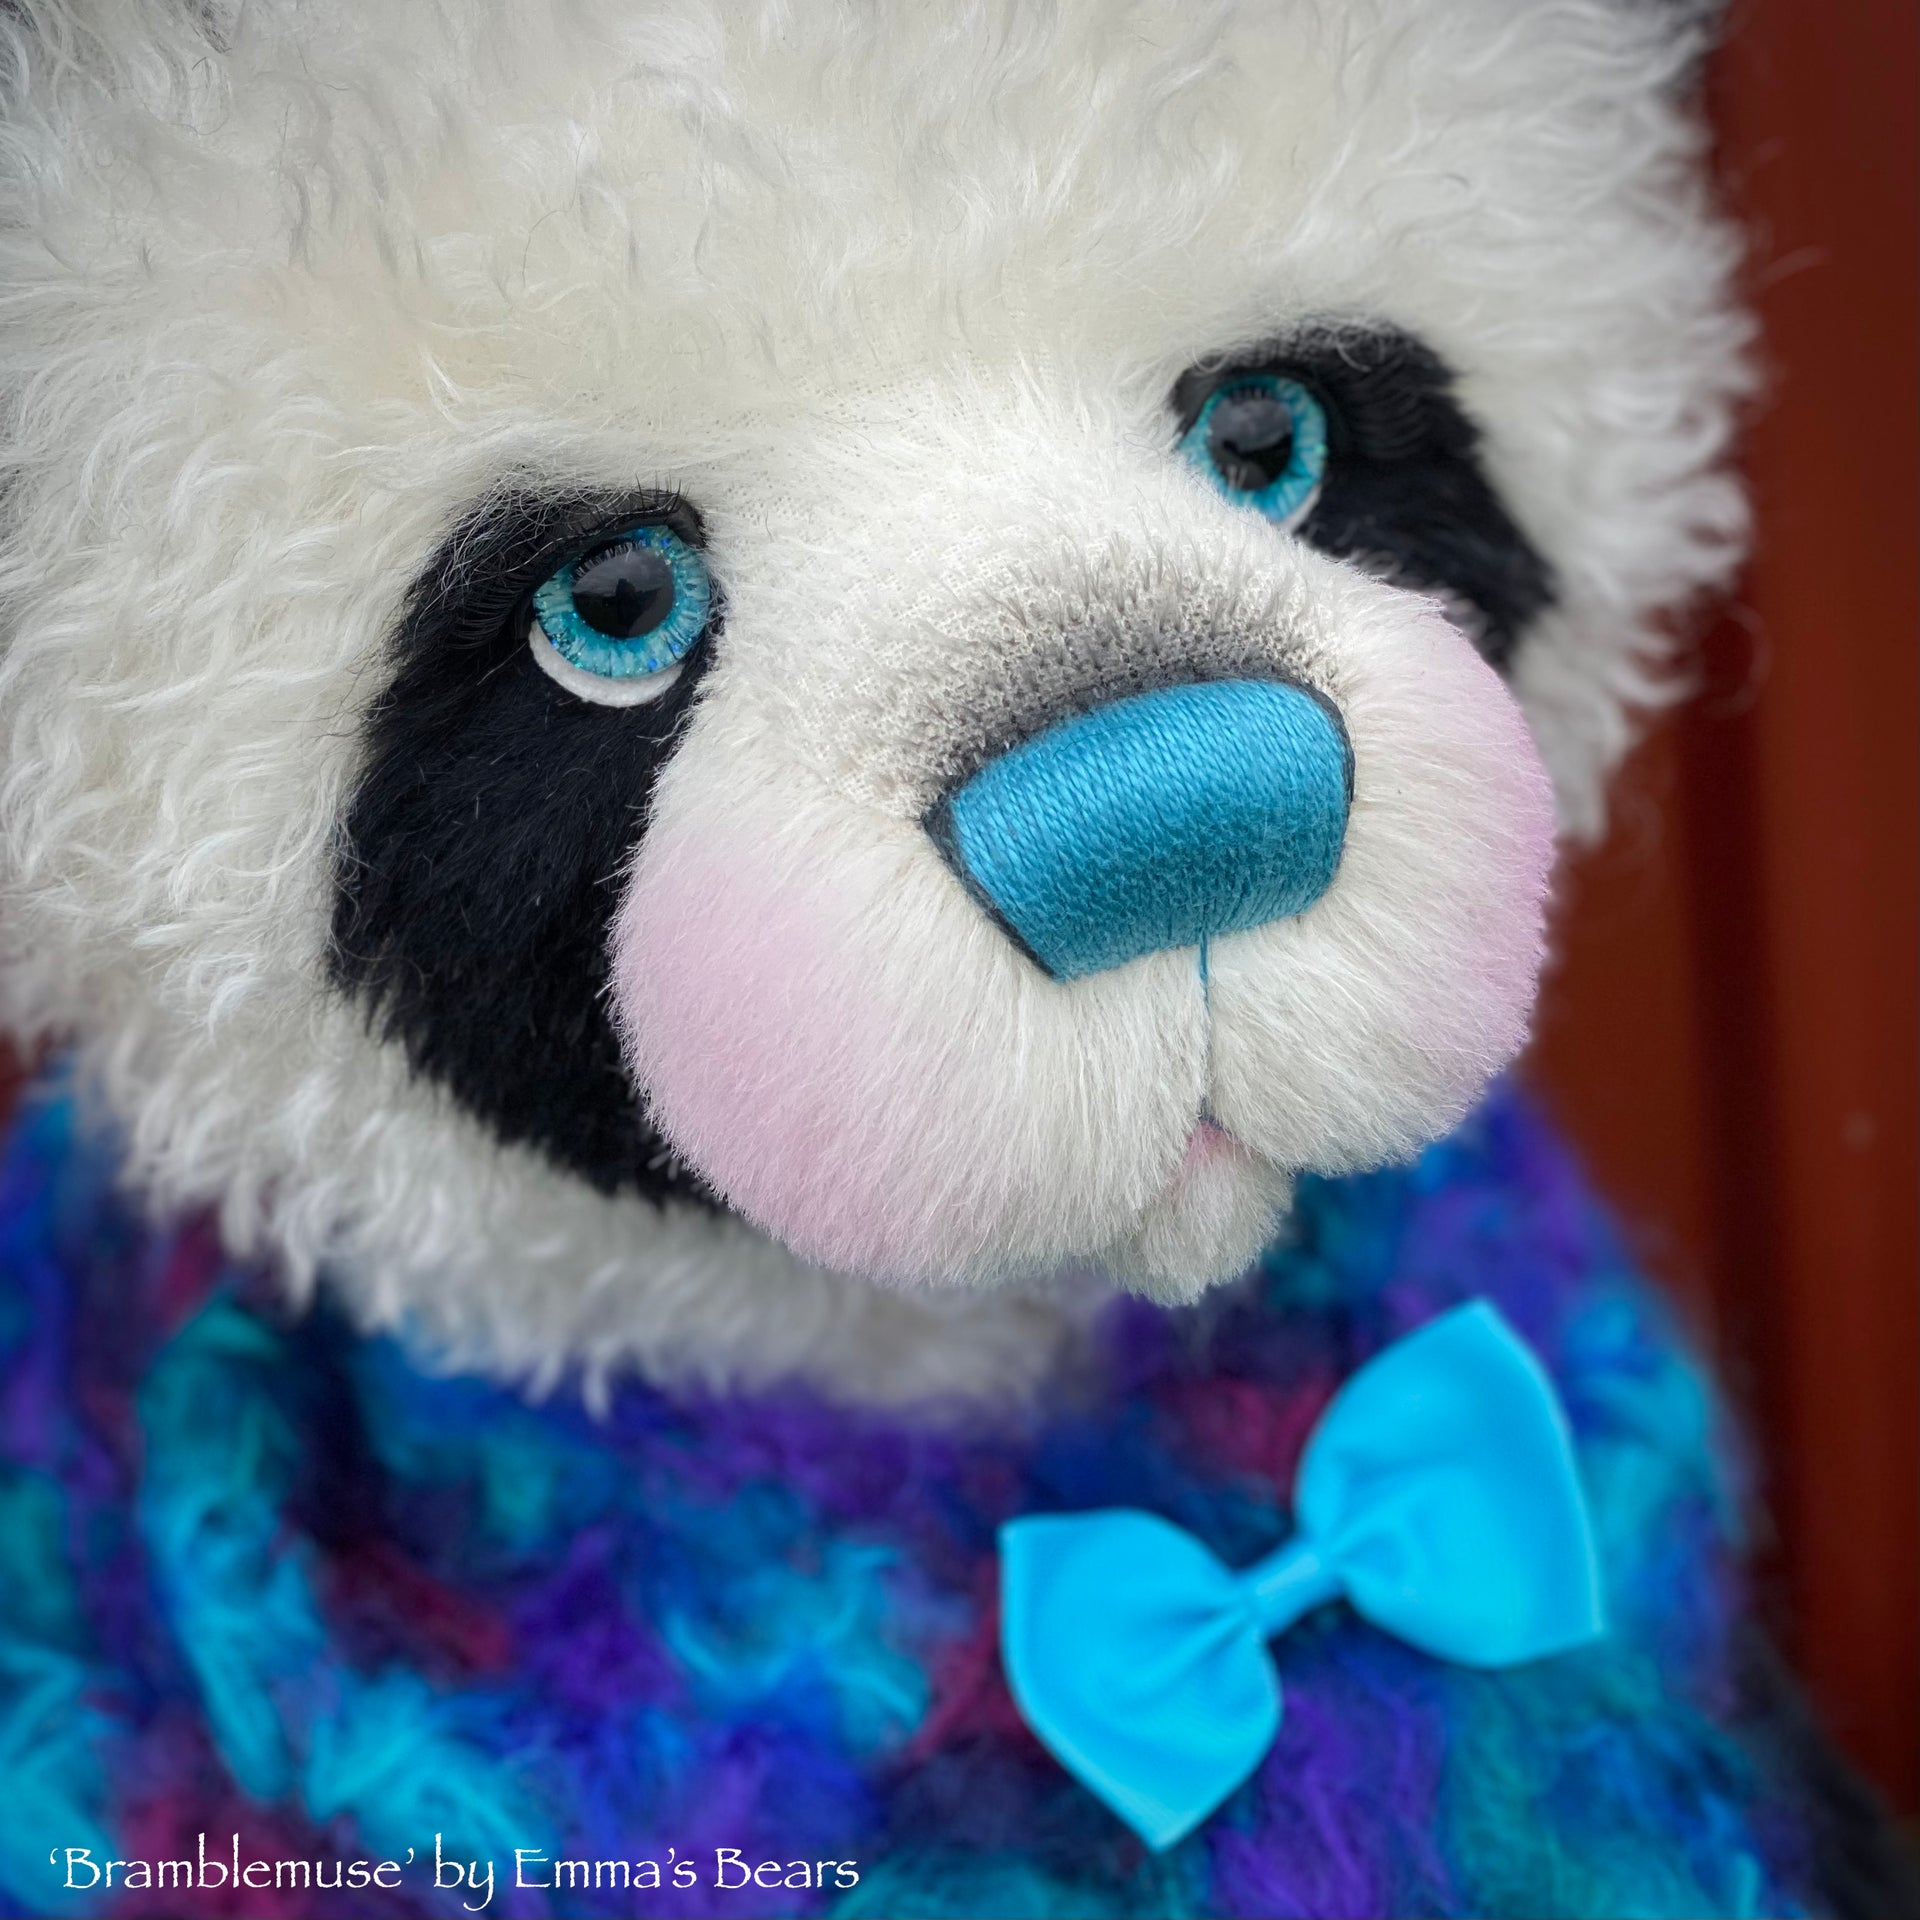 Bramblemuse - 24" mohair artist panda bear by Emma's Bears  - OOAK